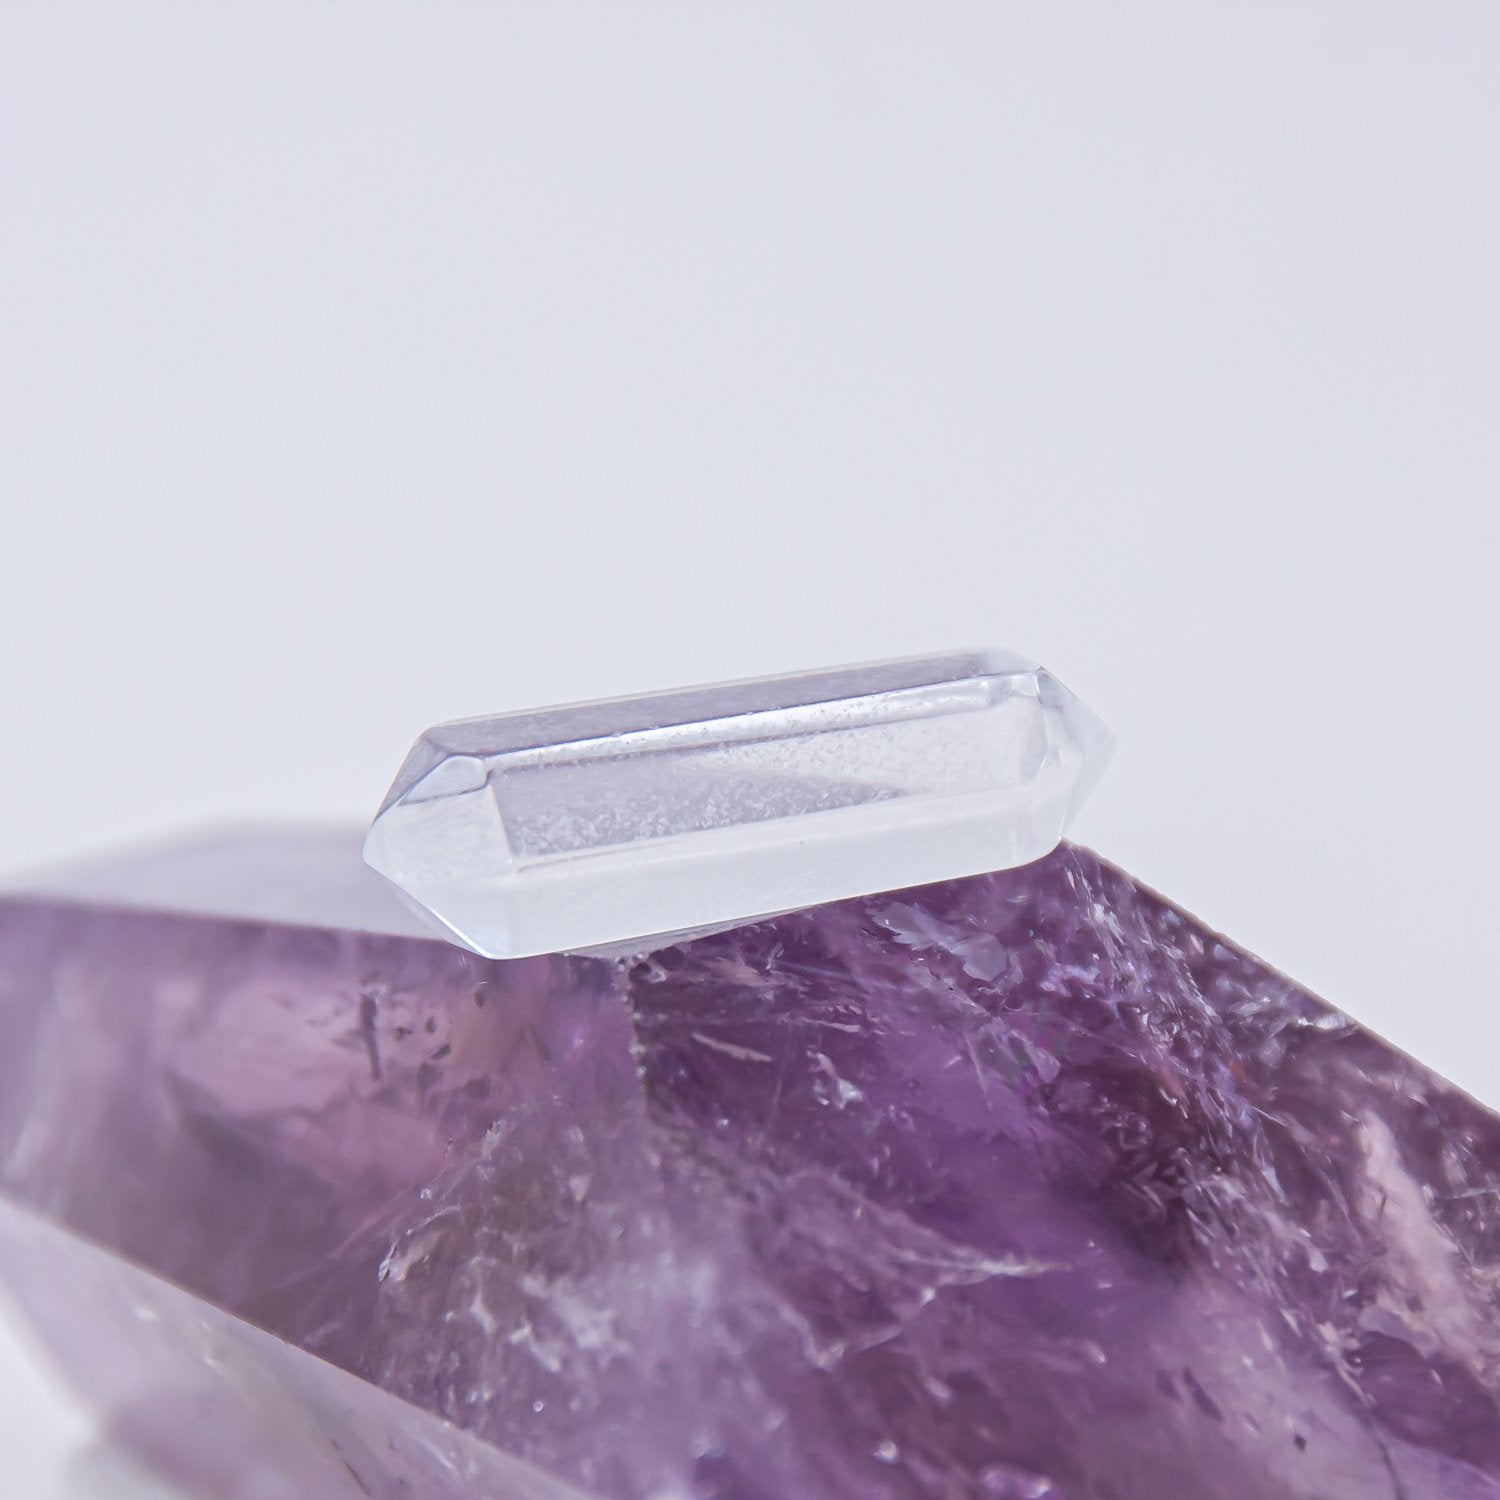 quartz double terminated crystal